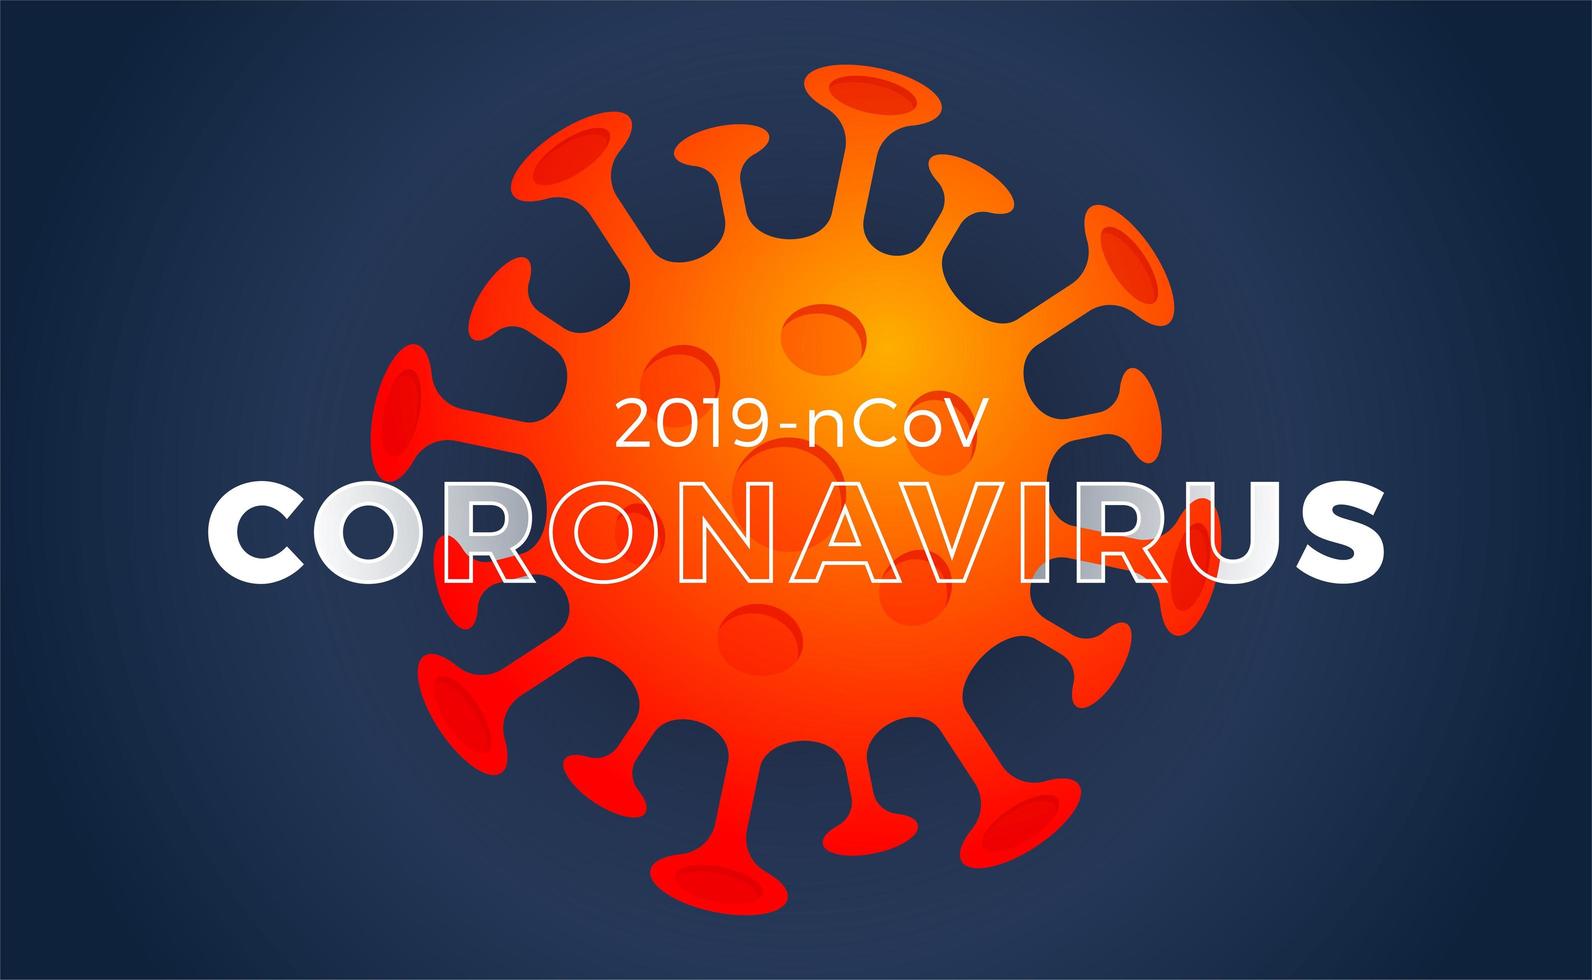 Coronavirus. Virus. Covid-2019. Outbreak Coronavirus. Pandemic, Medical, Healthcare, Infectious, Virology, Epidemiology Concept. Coronavirus 2019-ncov. 3d Background. Illustration. vector